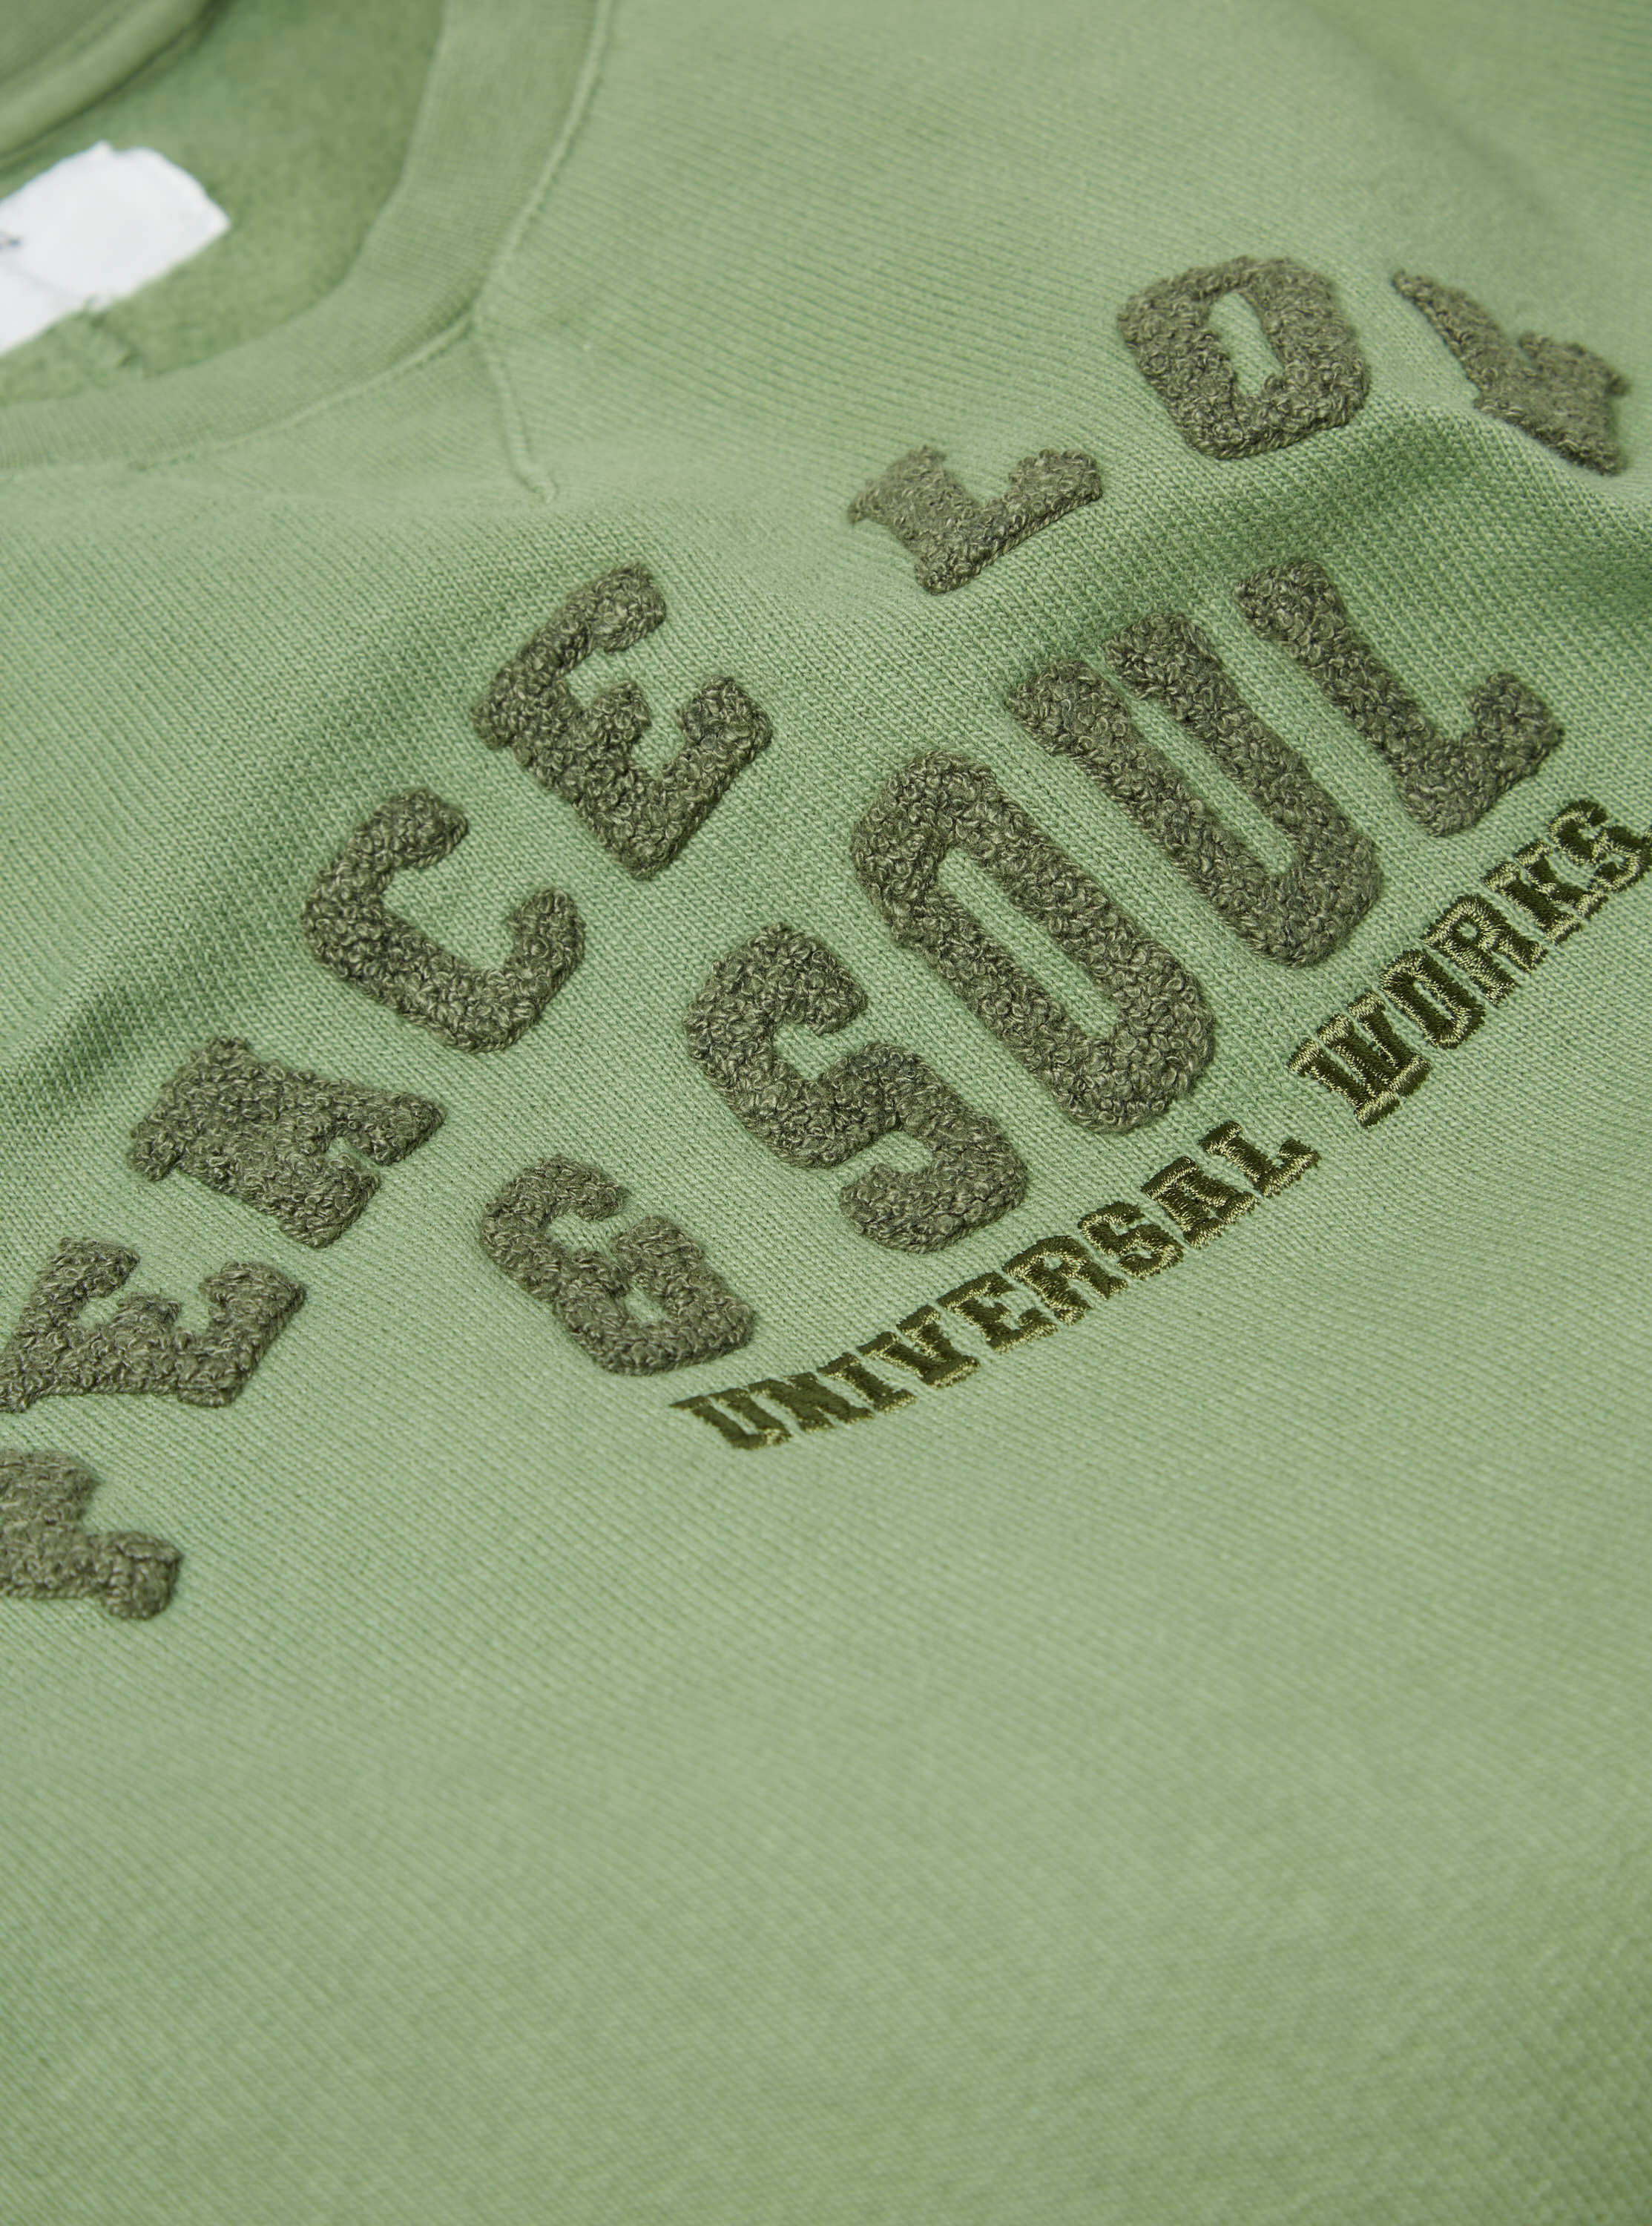 Universal Works Classic Crew Sweatshirt in Green Dry Brushback PLS